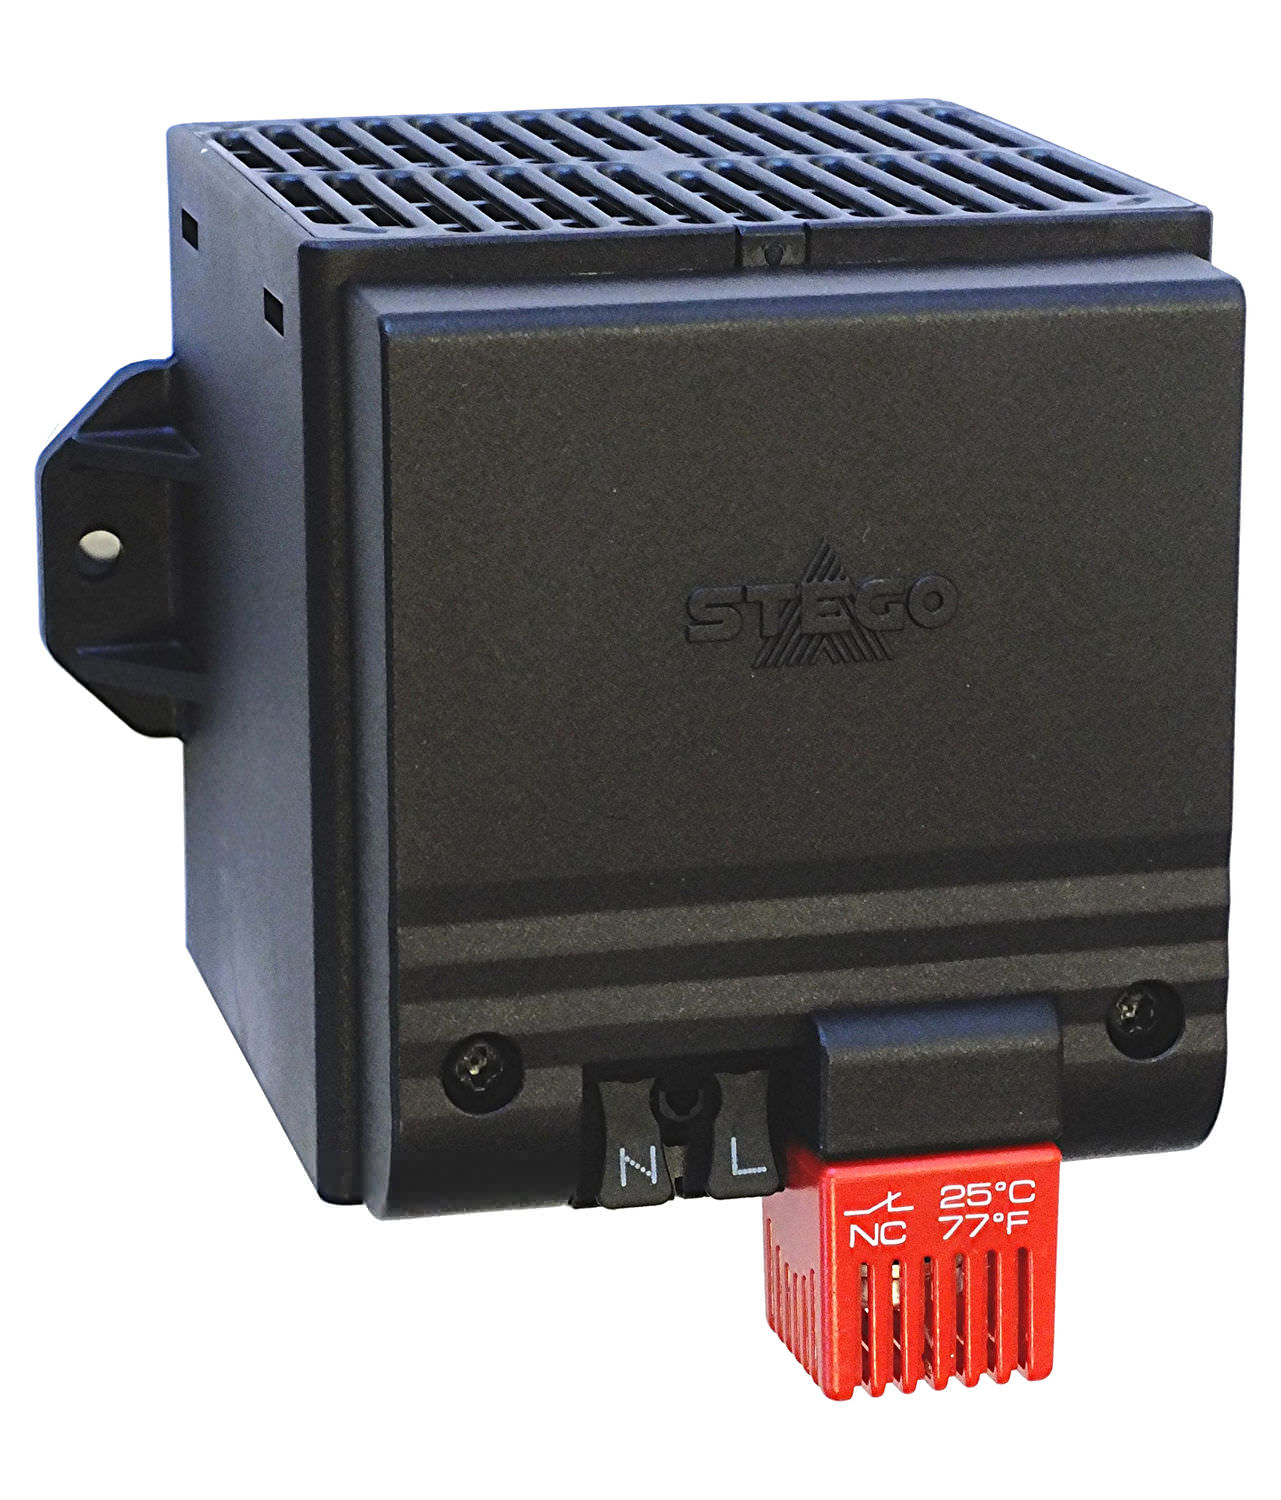 Ptc Resistance Heater Fan In Plastic With Thermostat regarding measurements 1281 X 1500